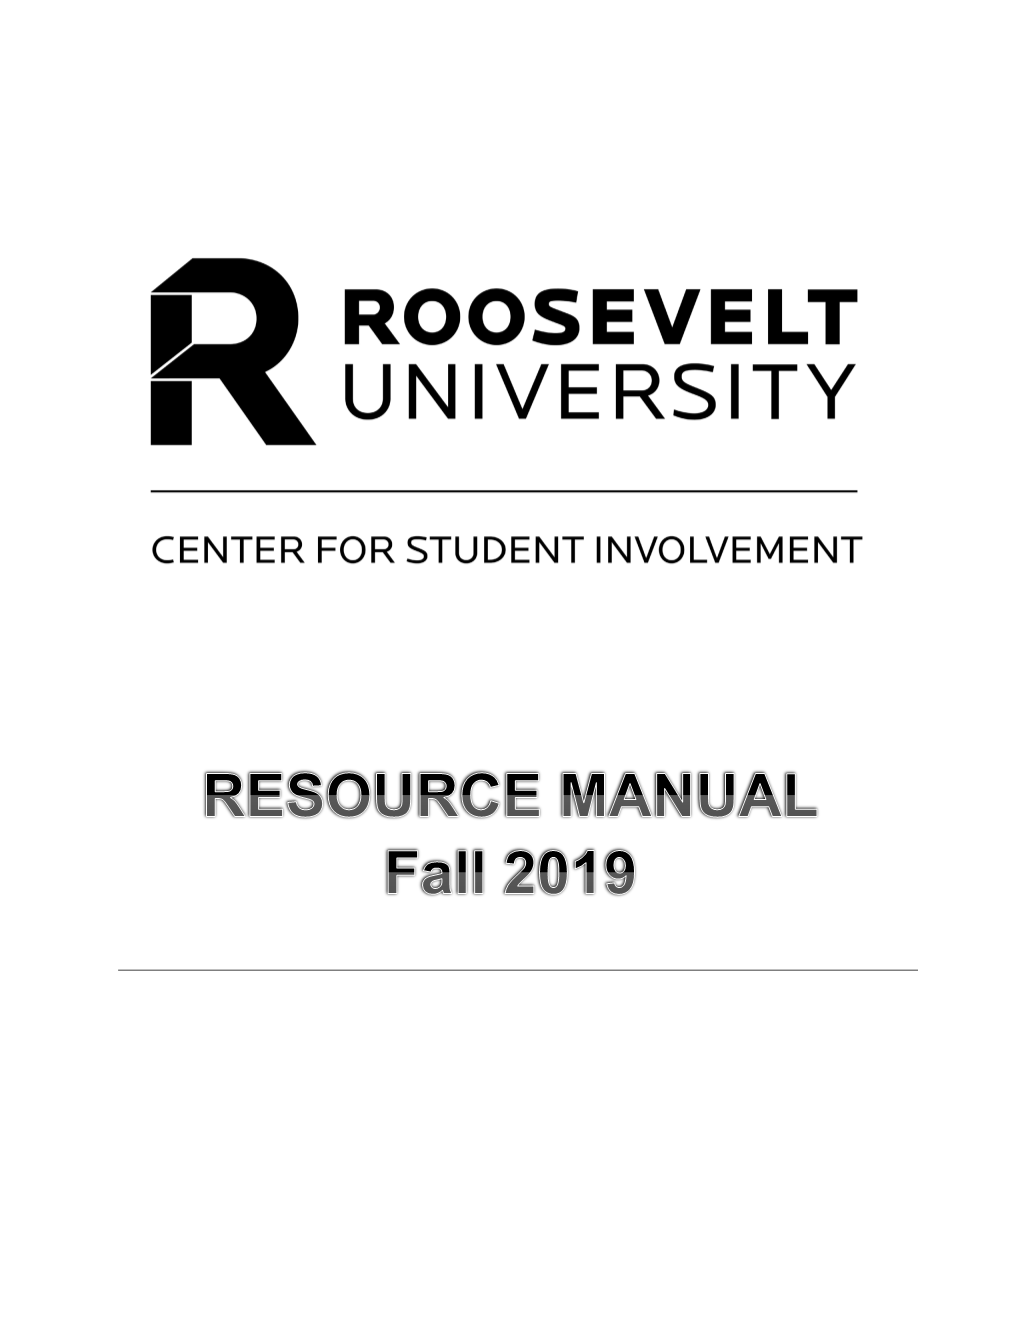 Roosevelt University Student Organization Manual Fall 2019